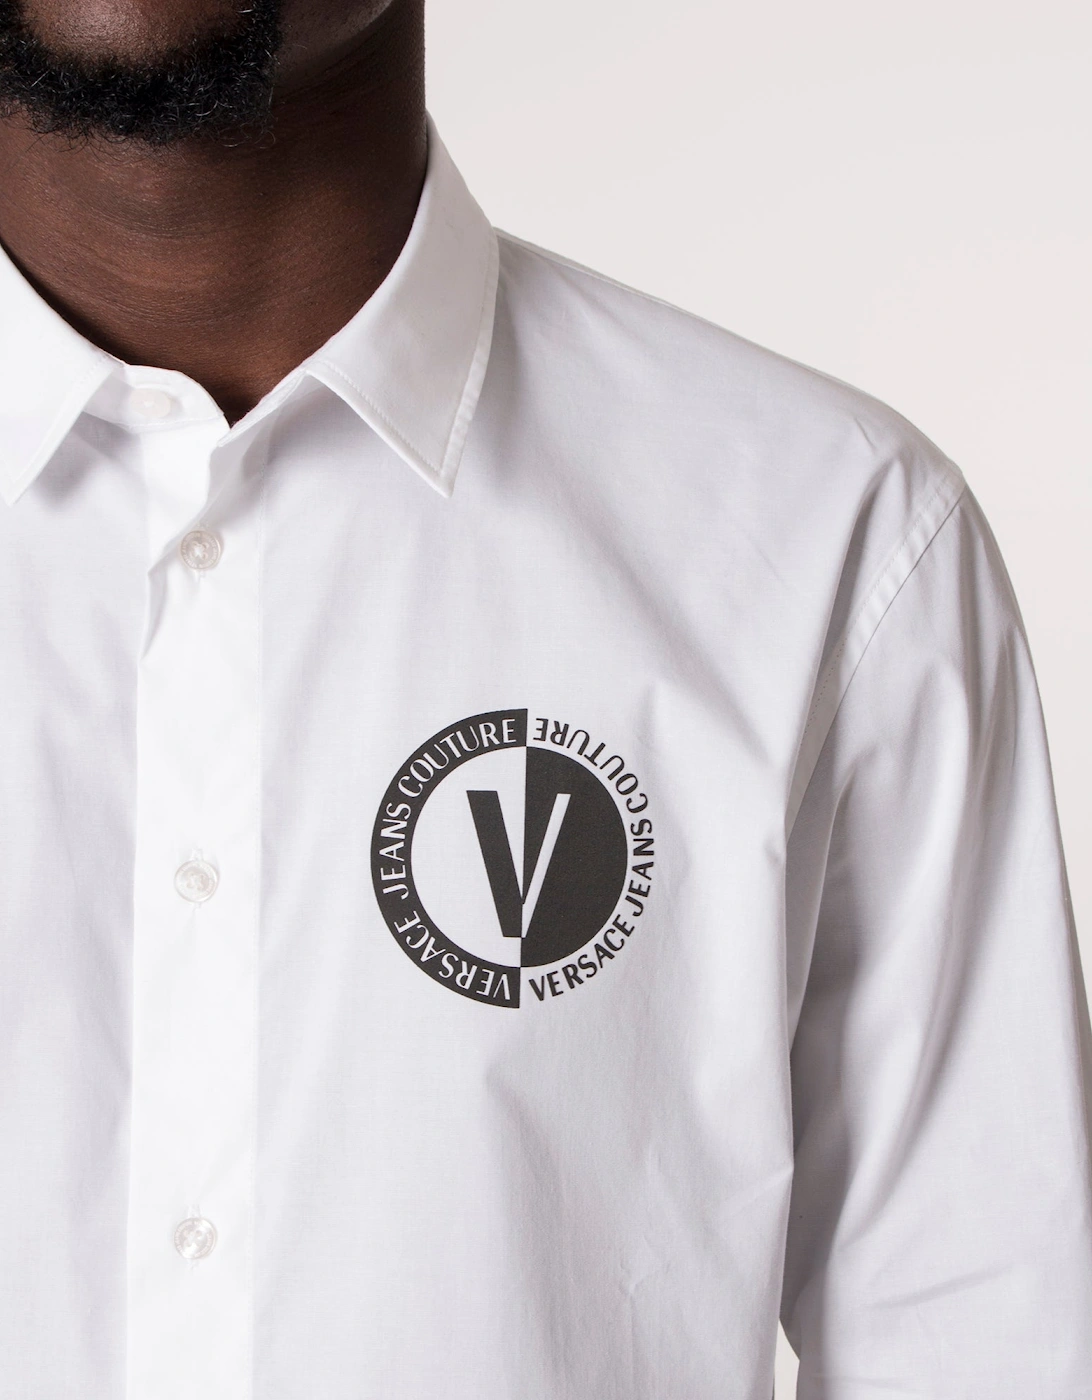 New V Emblem Logo Stretch Shirt